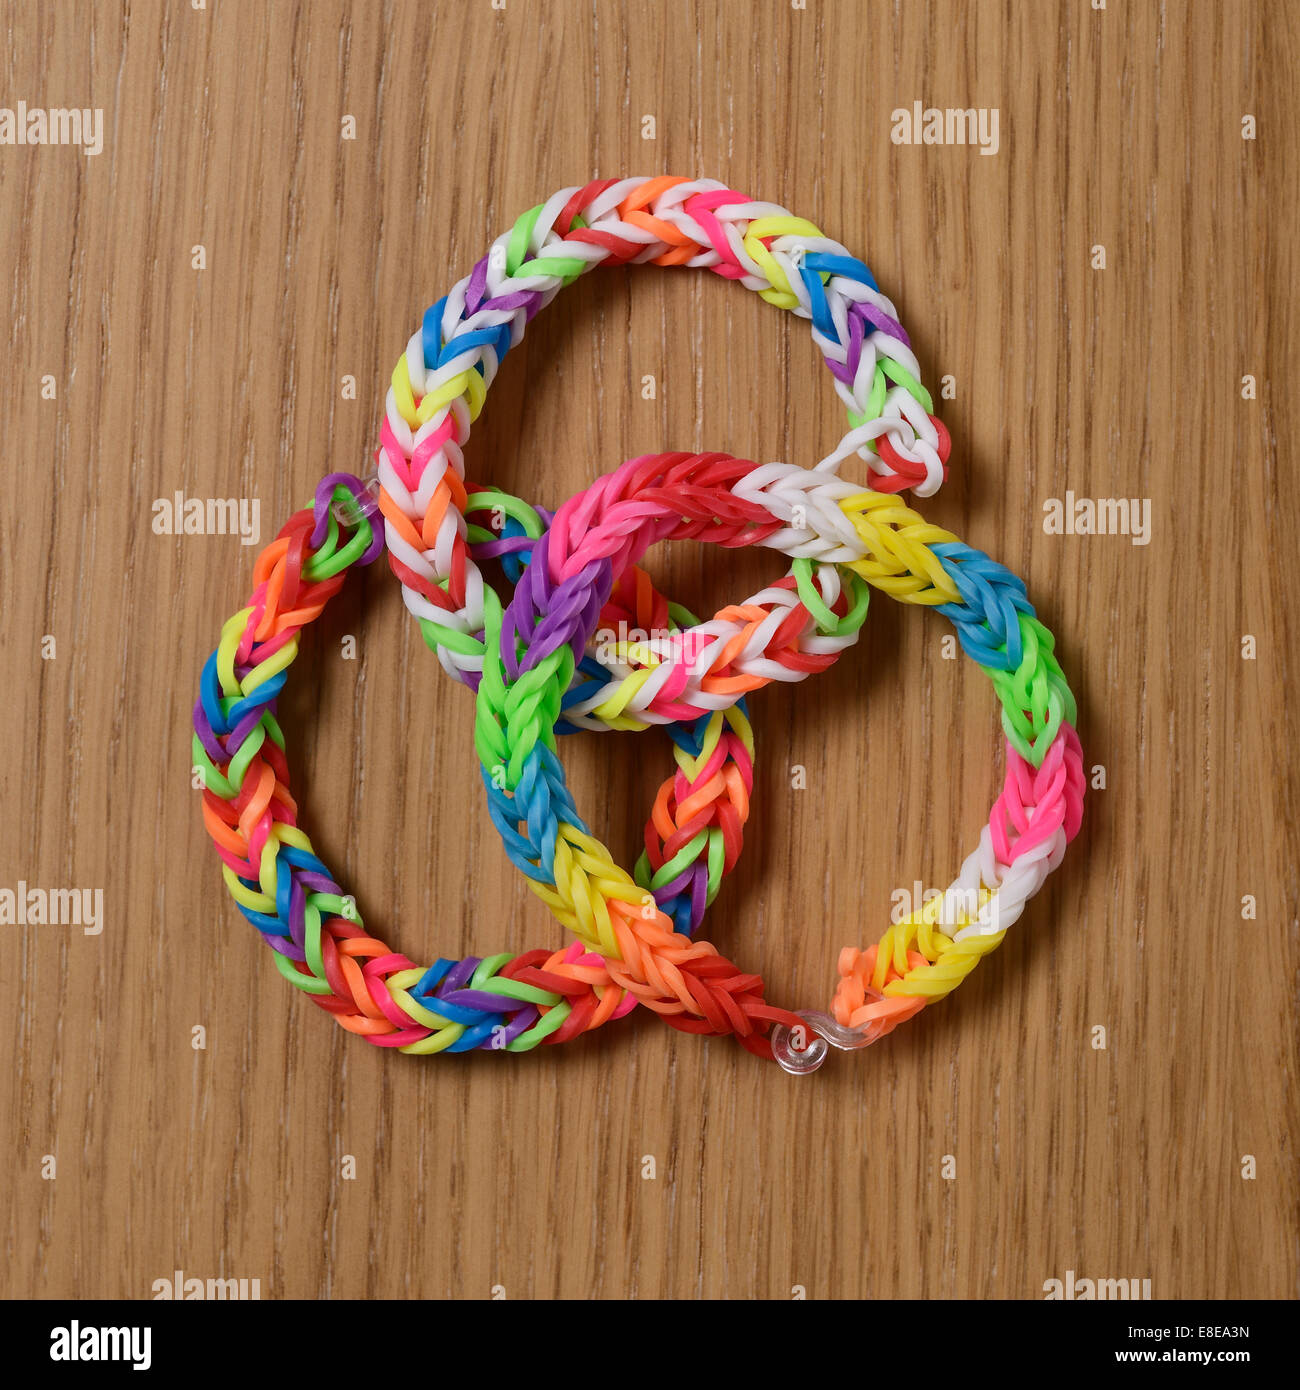 Three Loom Band bracelets Stock Photo